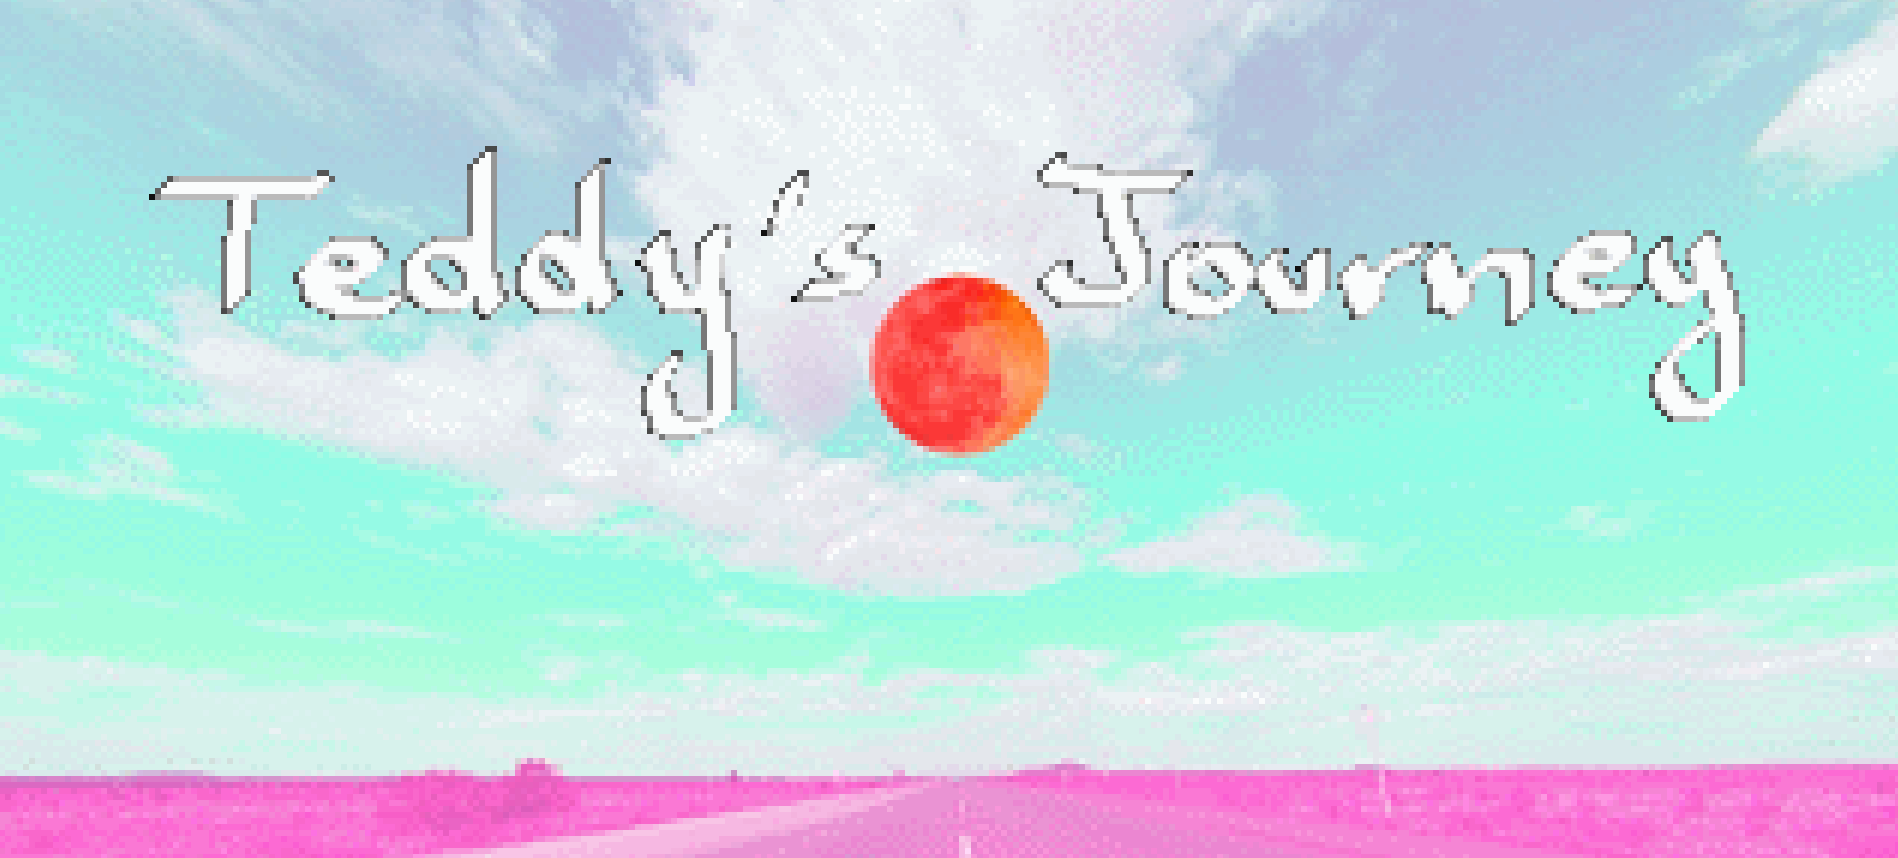 Teddy's Journey